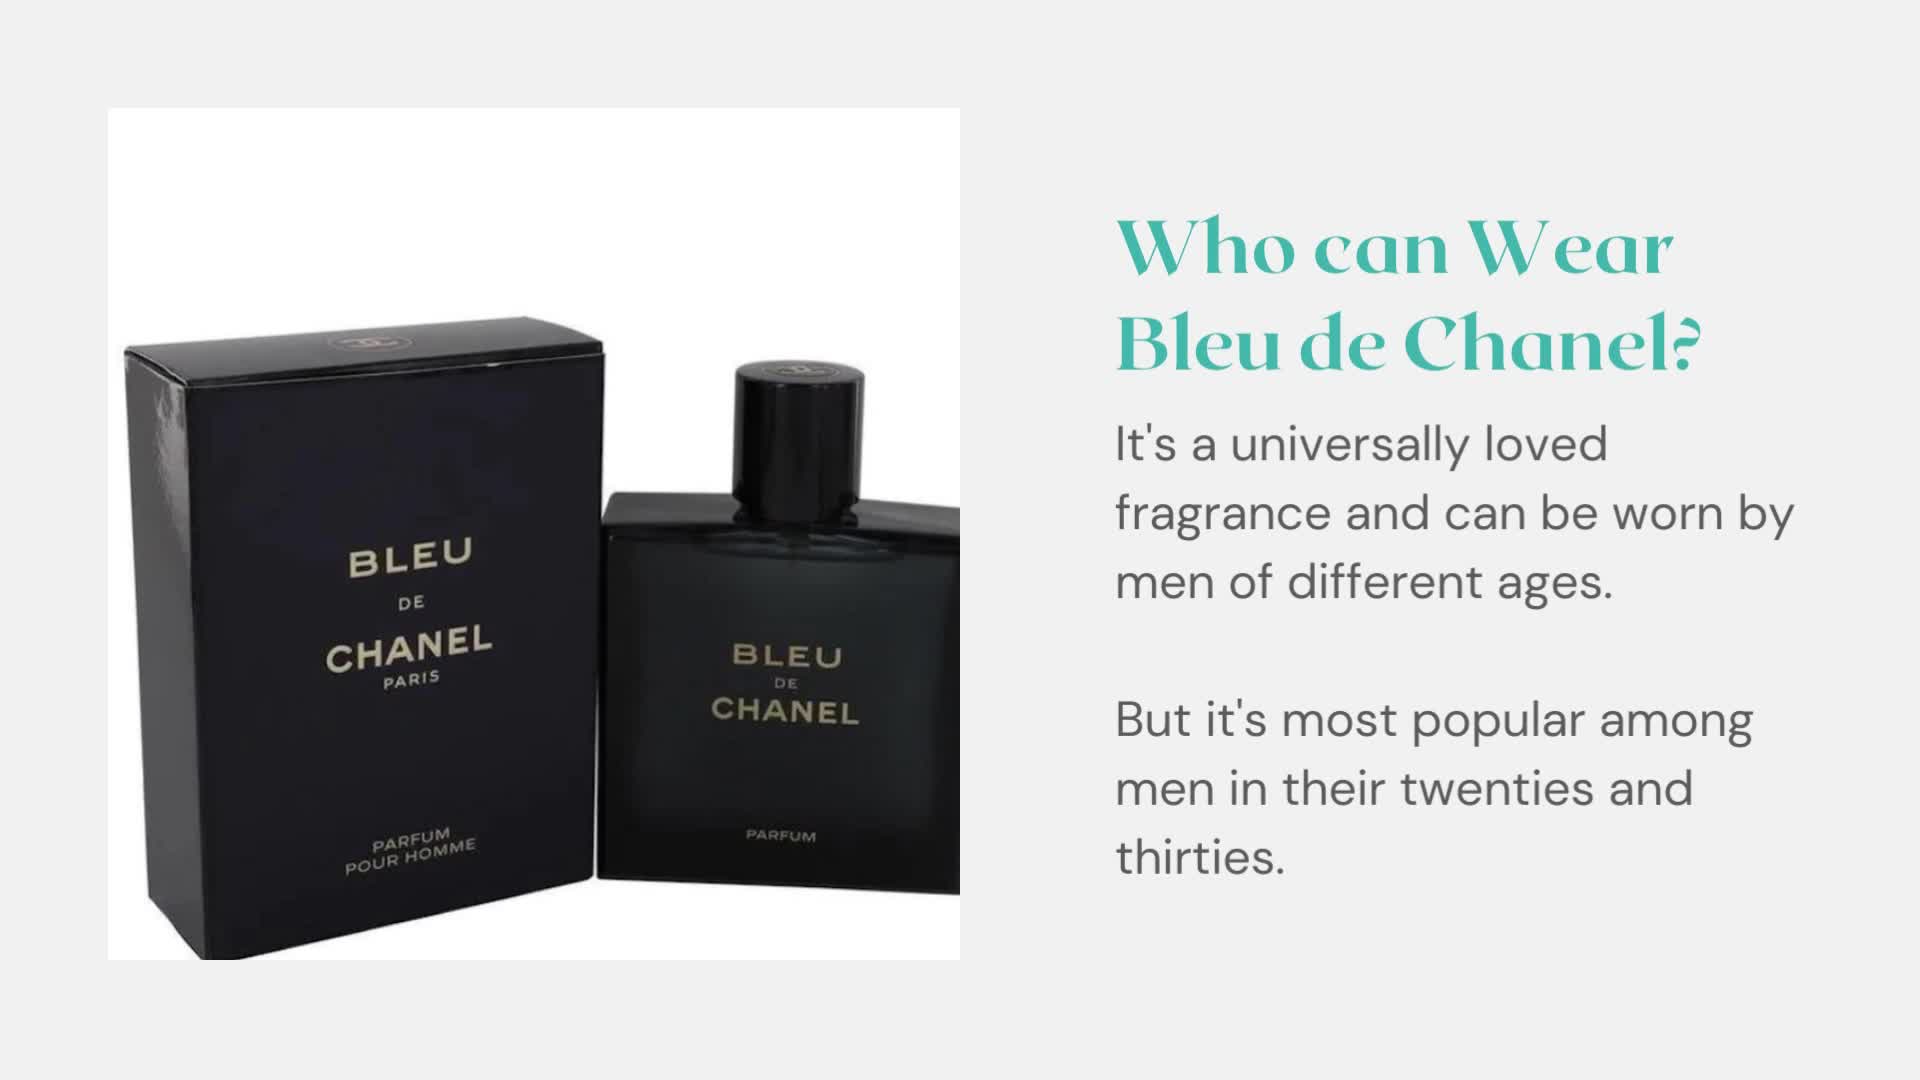 bleu de chanel perfume 5.0